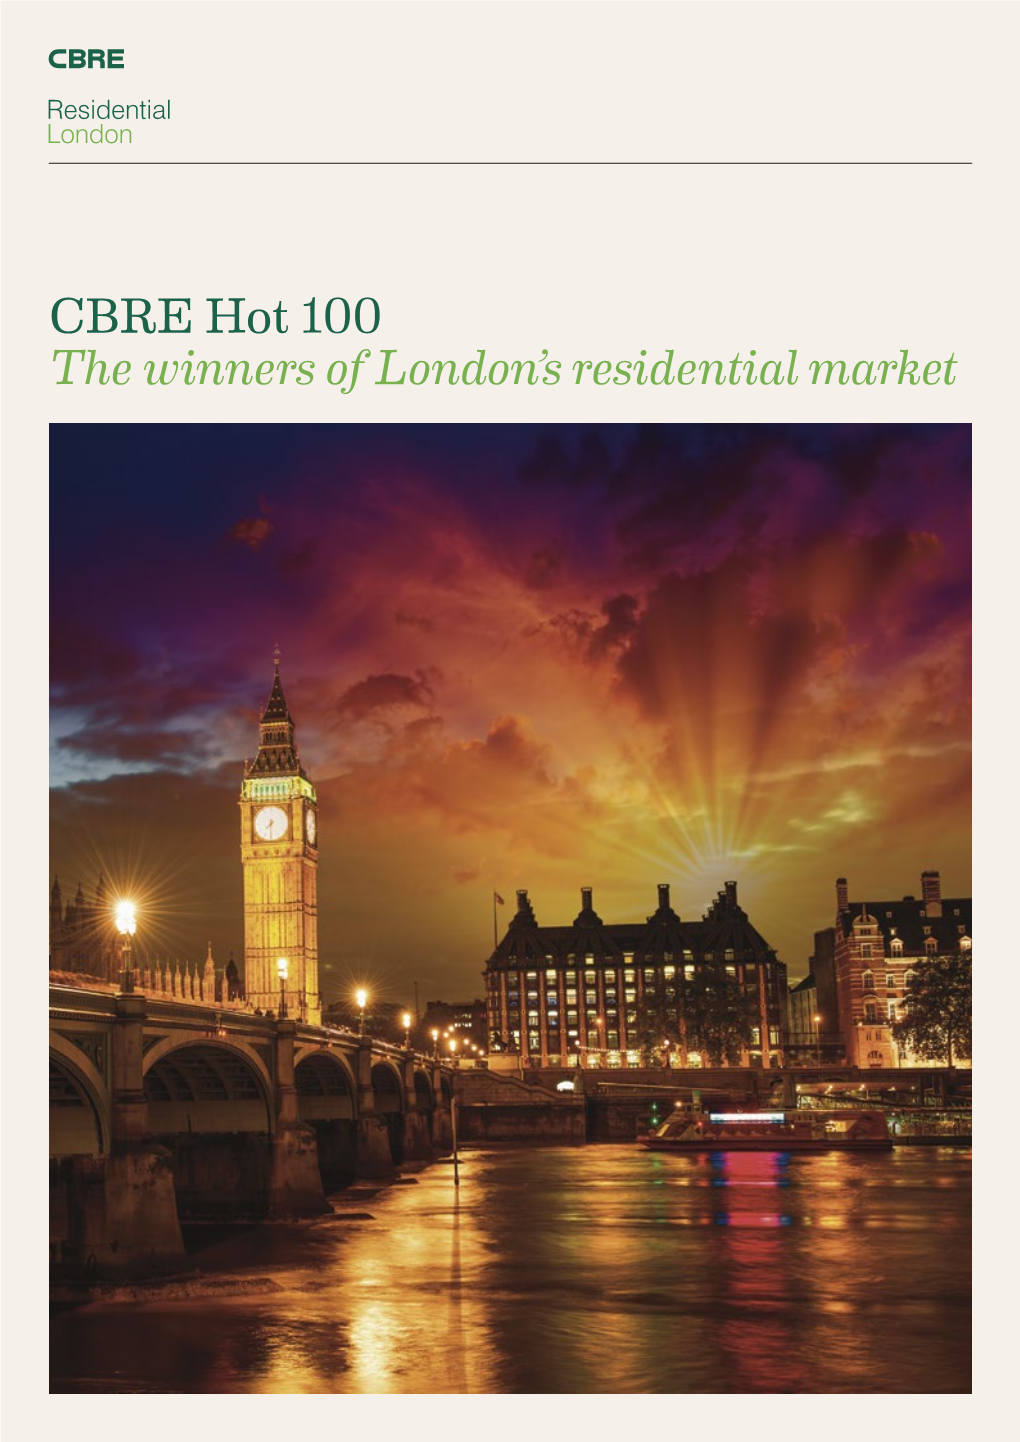 CBRE Hot 100 the Winners of London's Residential Market